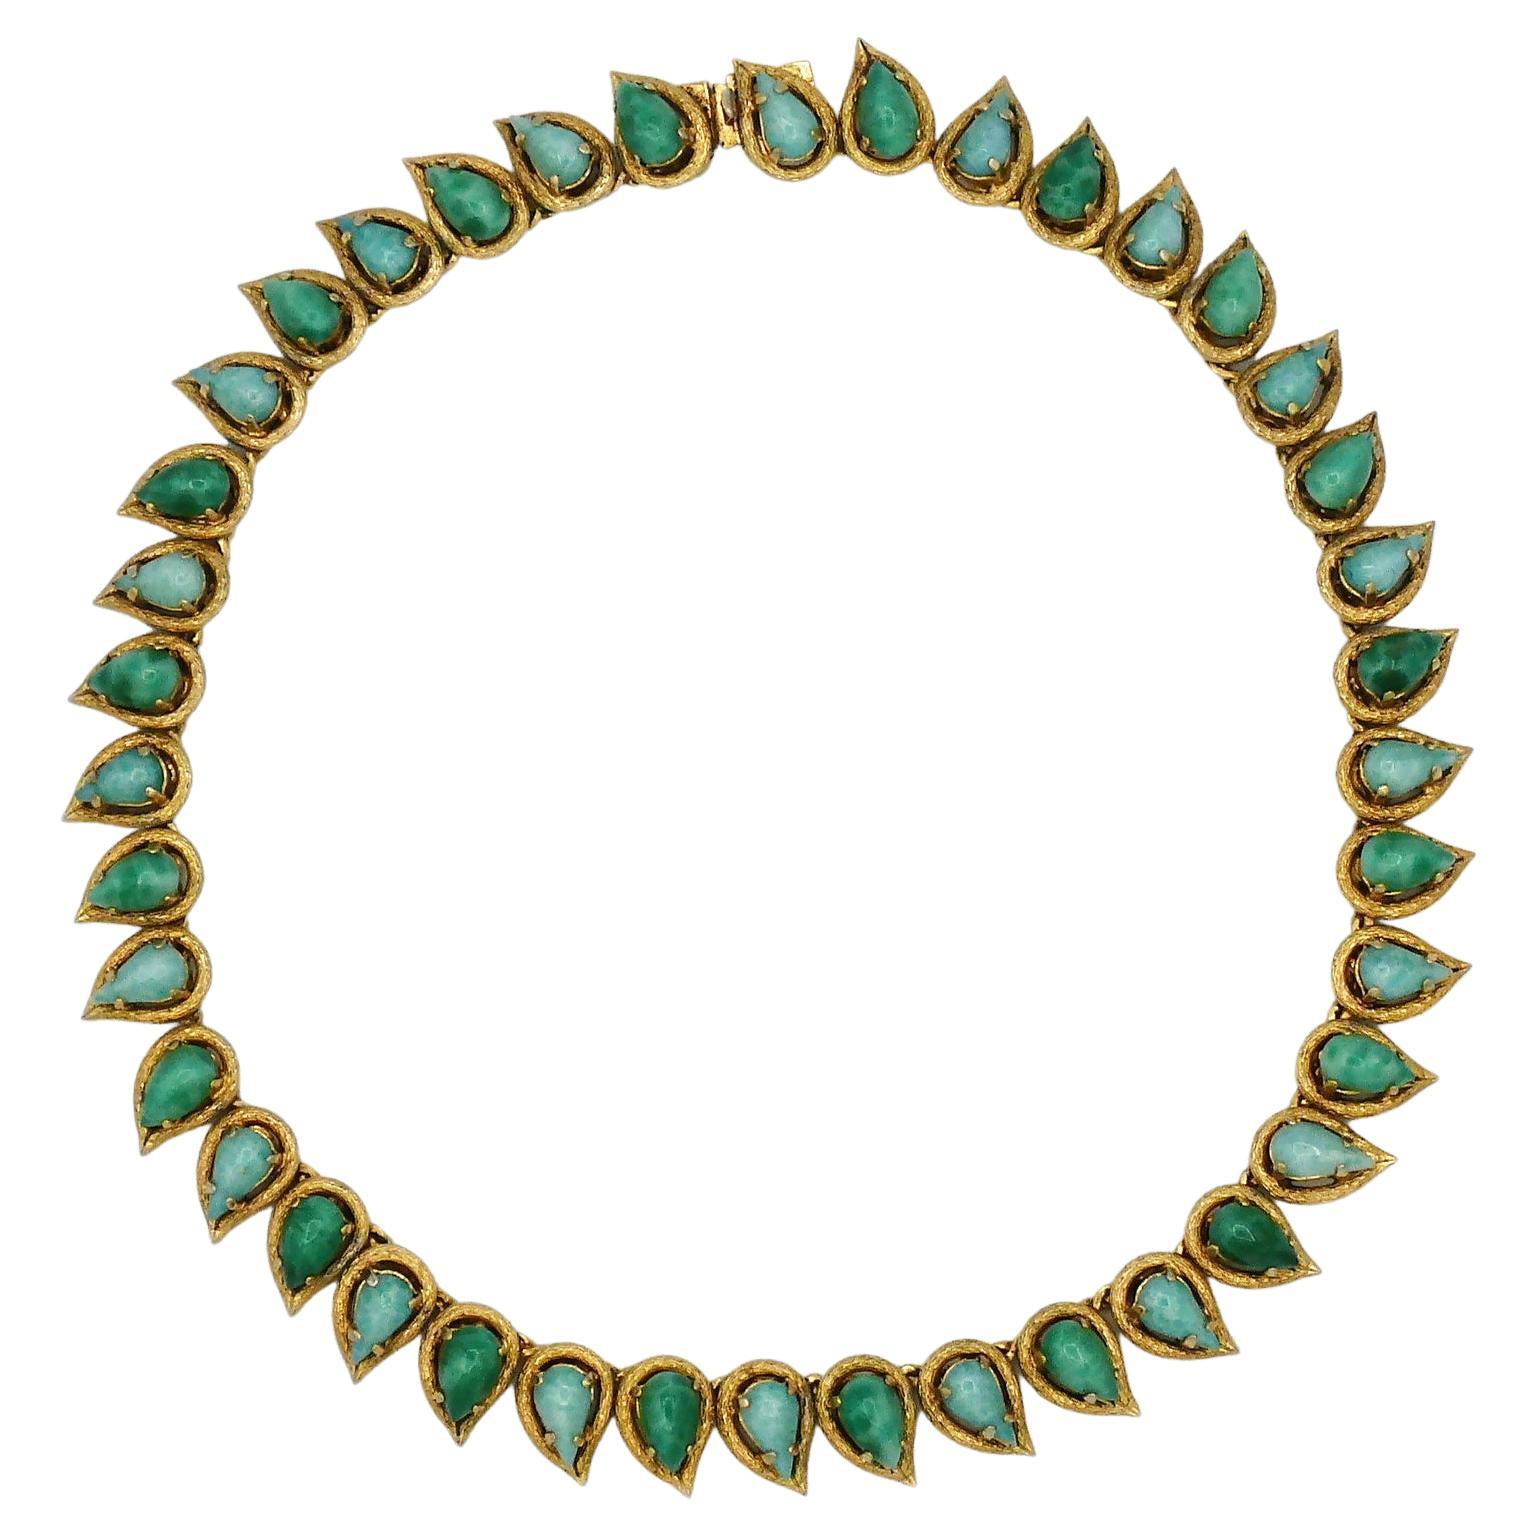 Christian Dior Vintage Faux Jade Stones Necklace 1965